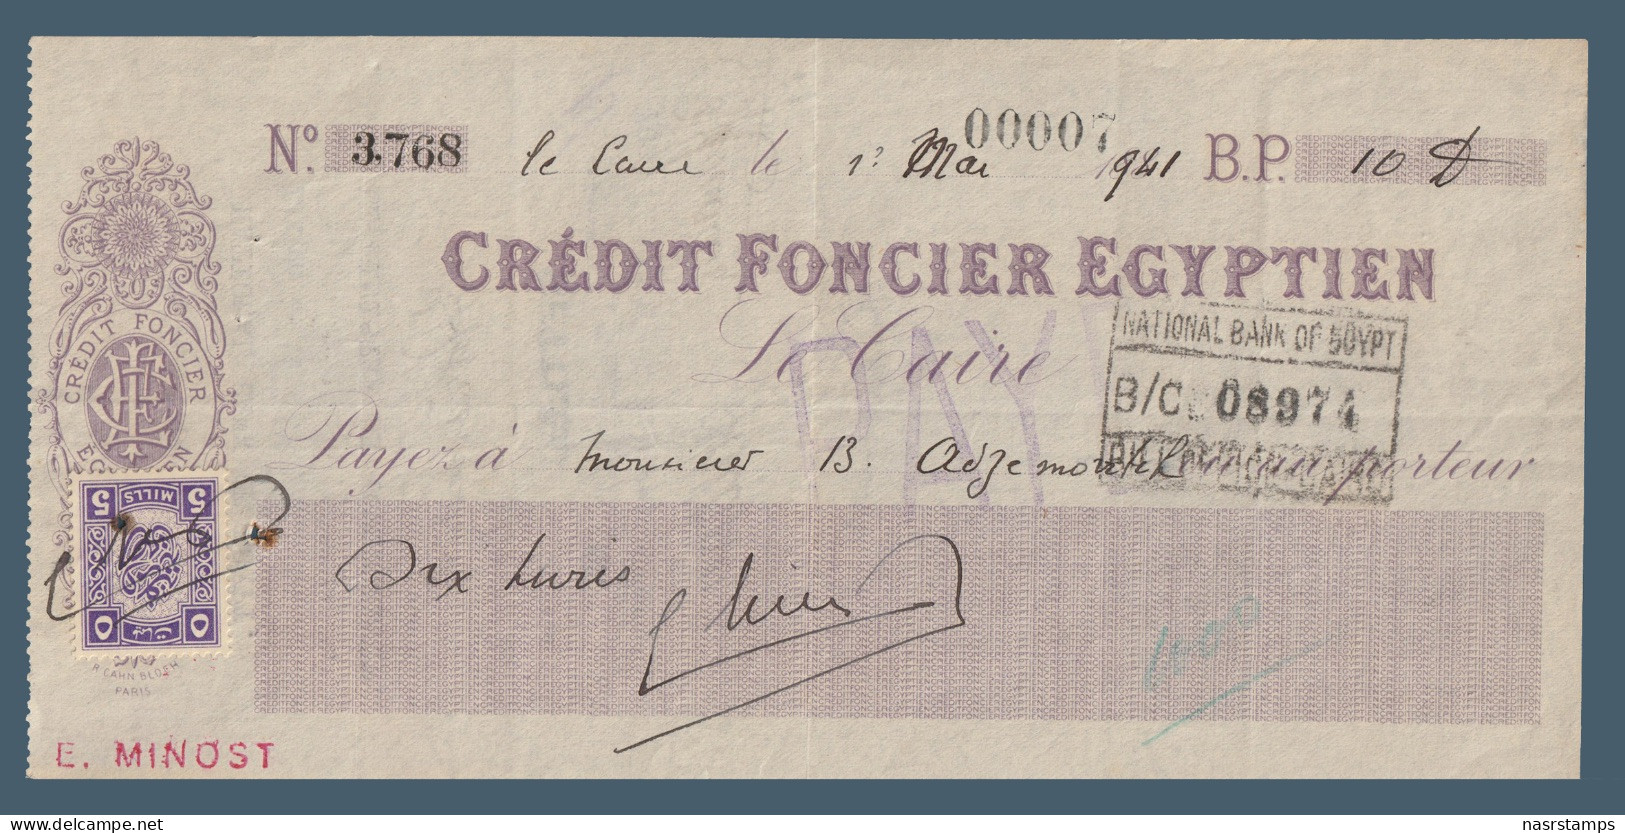 Egypt - 1941 - Vintage Check - ( Credit Foncier Egyptien - Cairo ) - Cheques & Traverler's Cheques